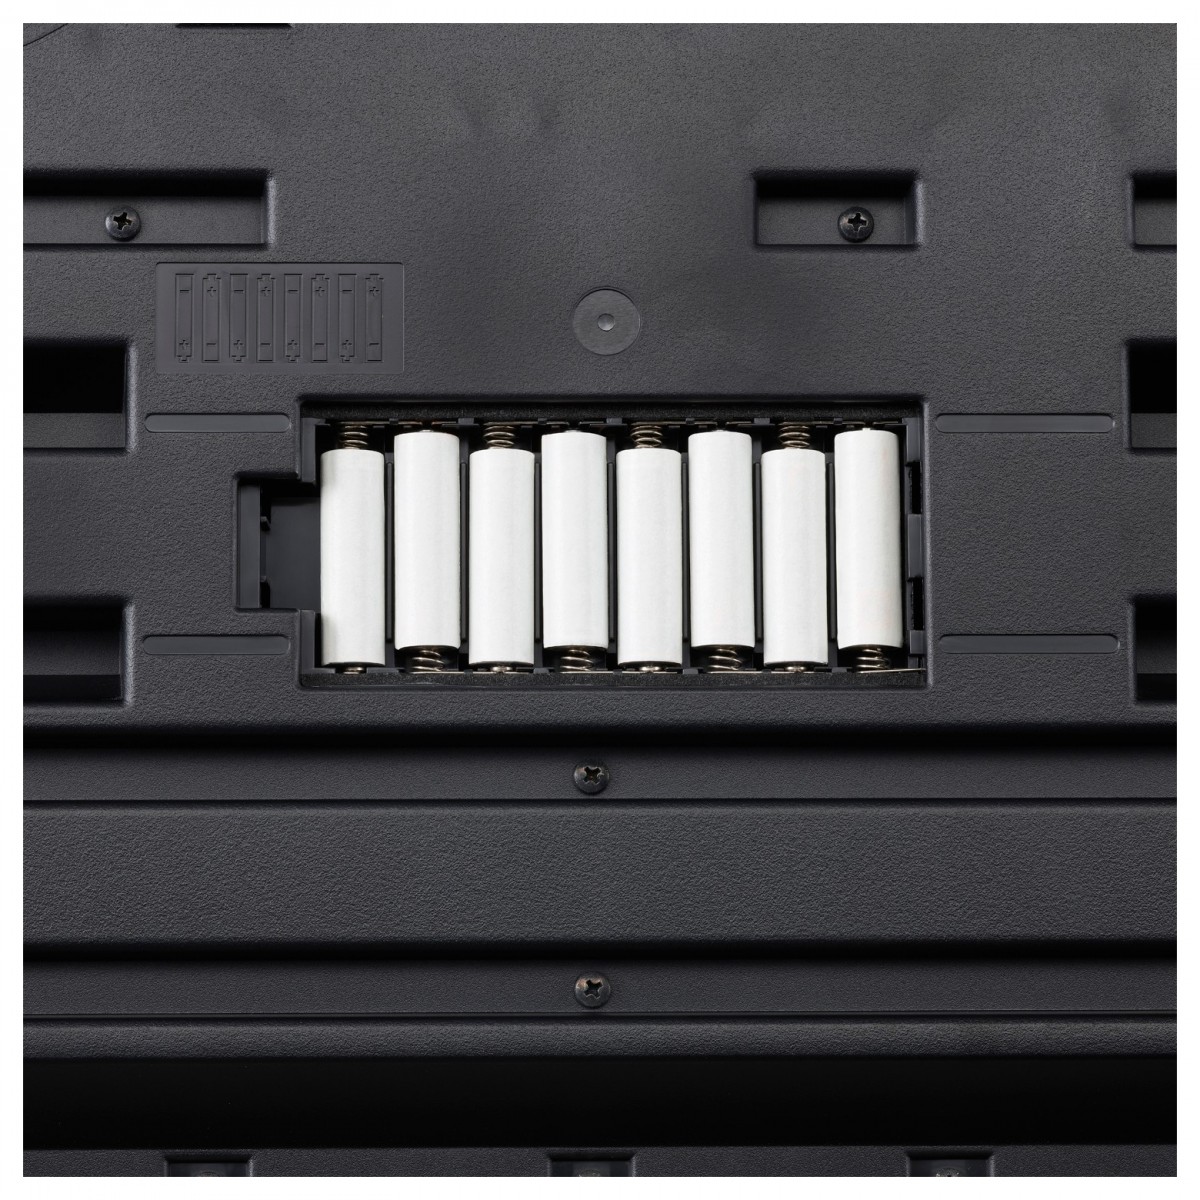 YAMAHA CK88 STAGE PIANO 88 TASTI PESATI MIDI USB 5